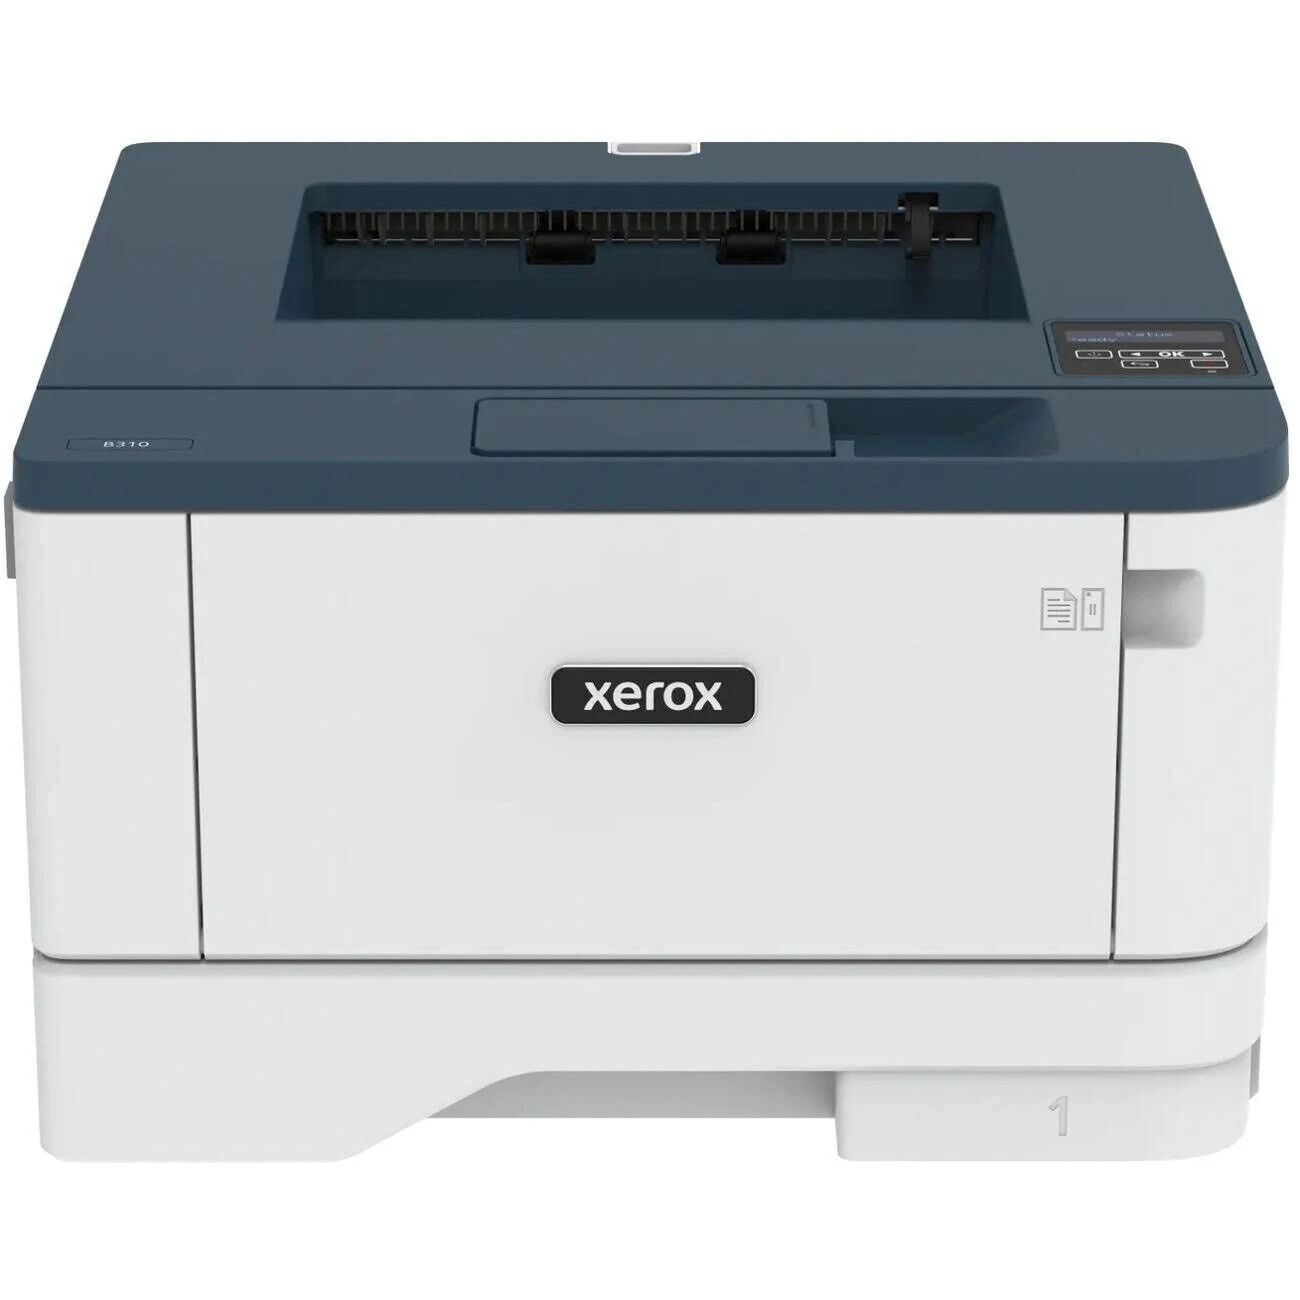 Xerox B310 Black and White Laser Printer Wireless B310/DNI